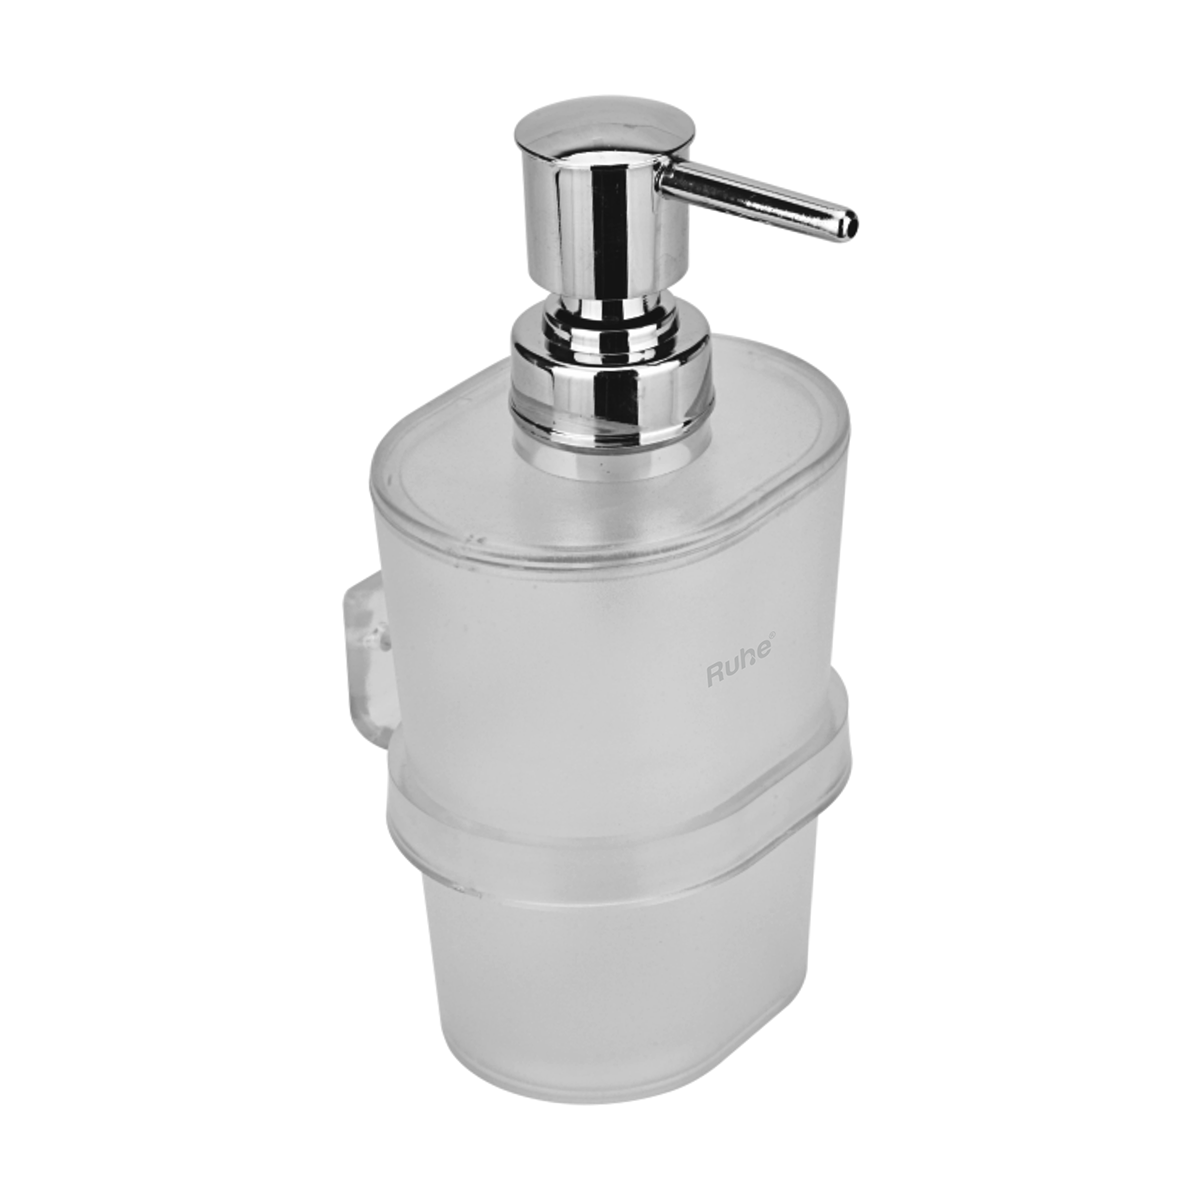 Round ABS Liquid Soap Dispenser - by Ruhe®